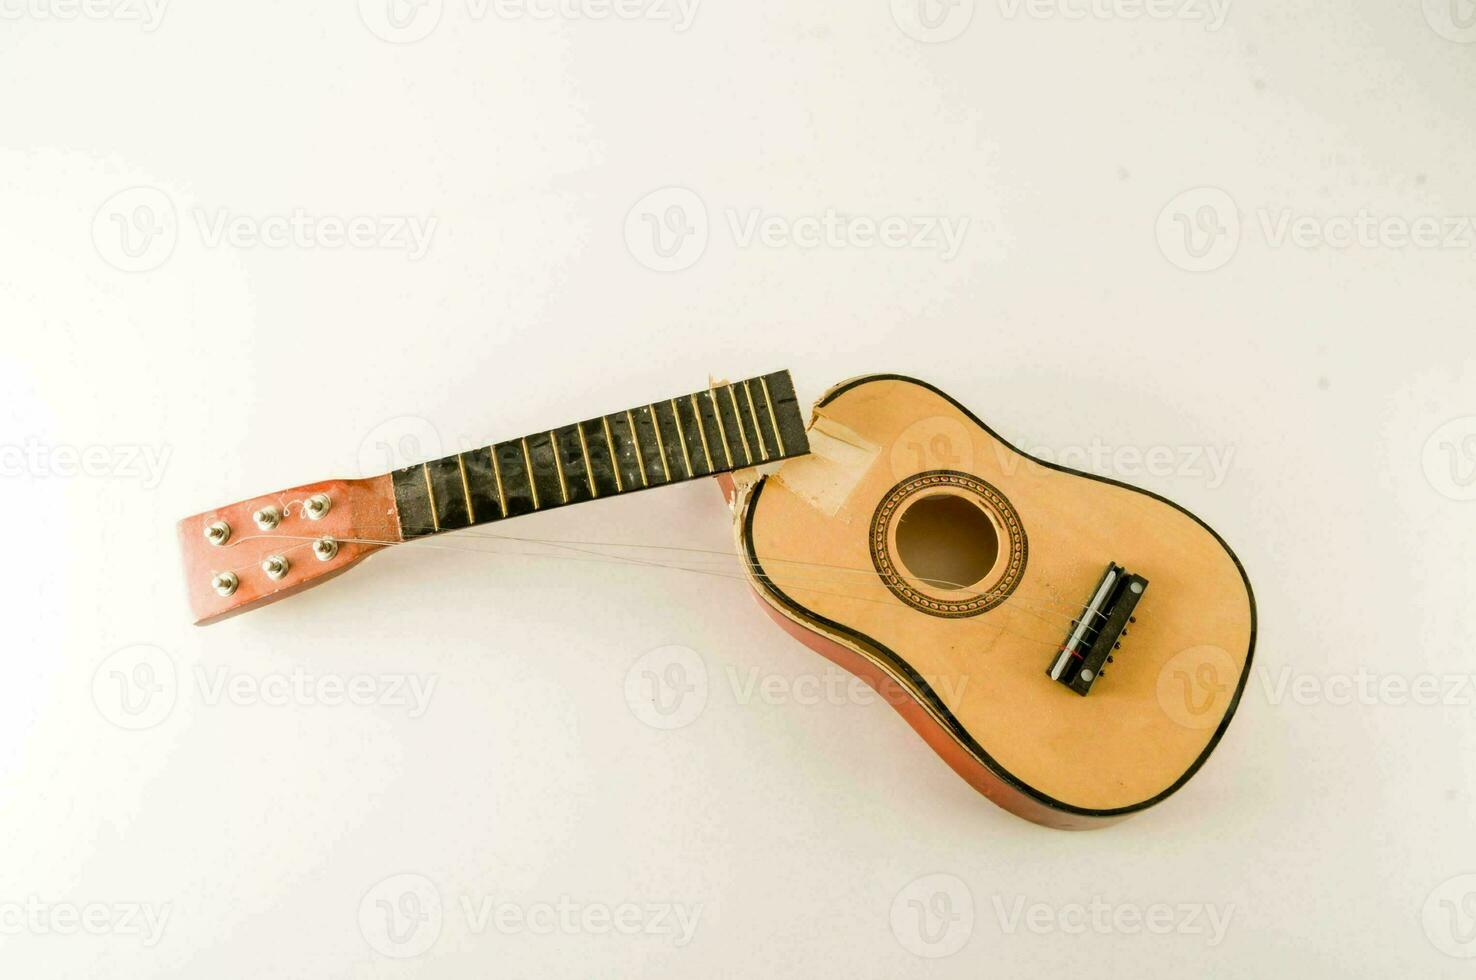 en små trä- gitarr på en vit yta foto